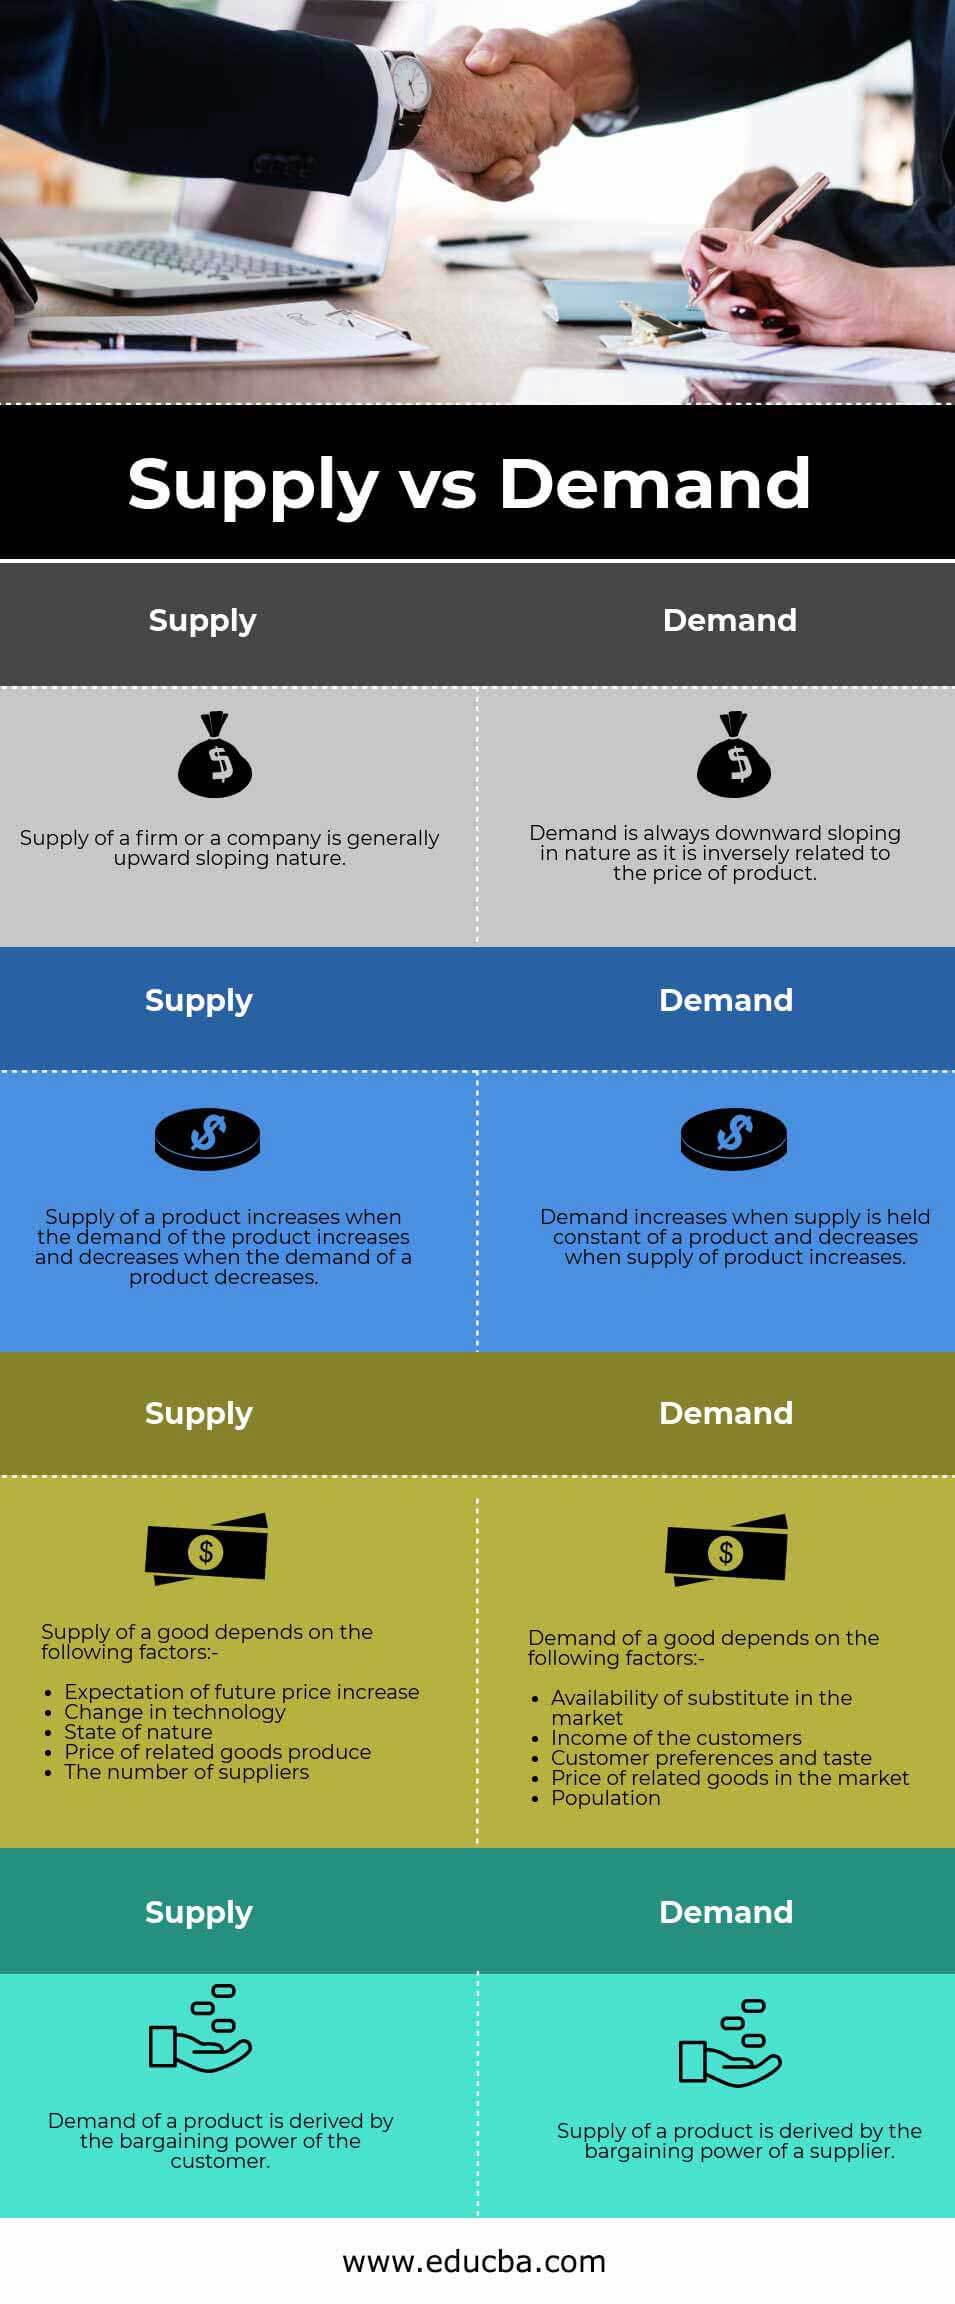 Supply vs Demand info